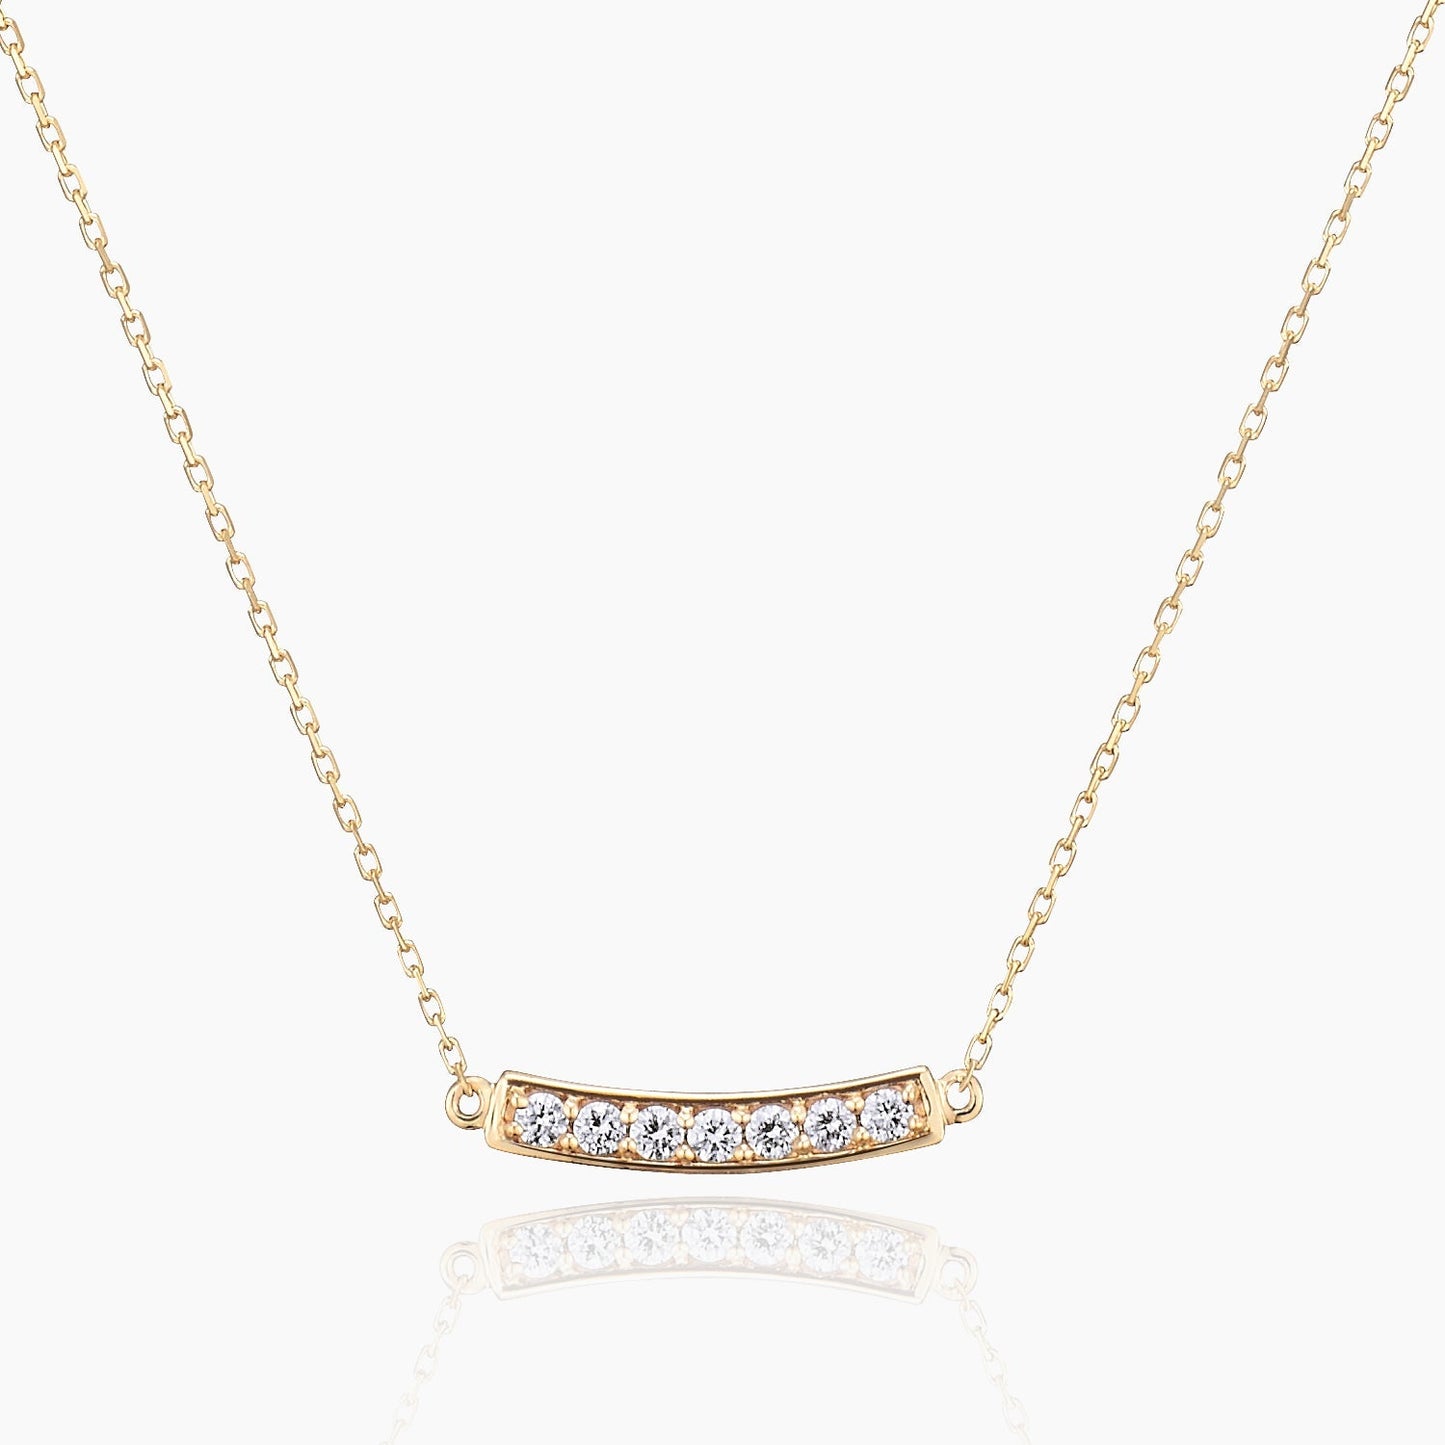 Earl アール ネックレス 宝石は天然ダイヤモンド 計0.05ct 素材はK10のピンクゴールド 商品番号MA10 正面